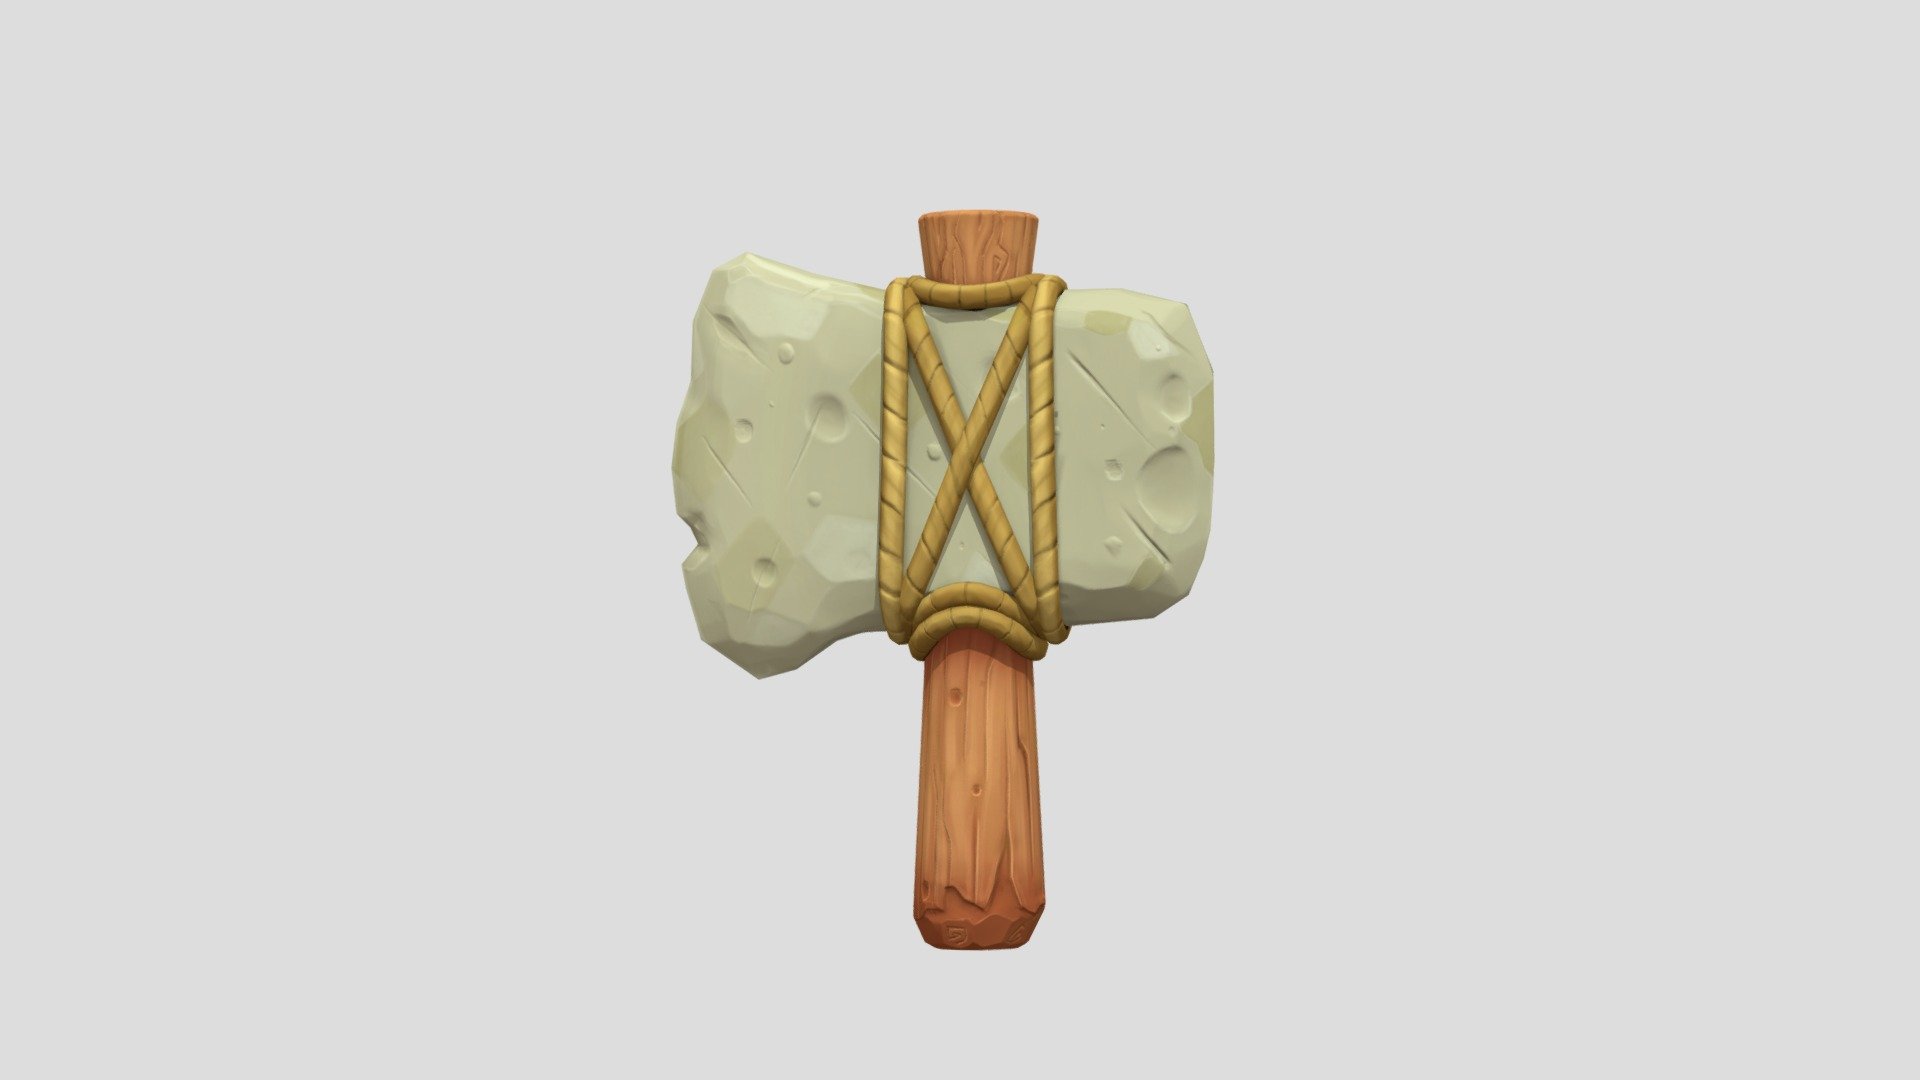 Original concept:
https://www.pinterest.com.mx/pin/99431104287449537/ - Cartoon axe - 3D model by dalkiaart 3d model